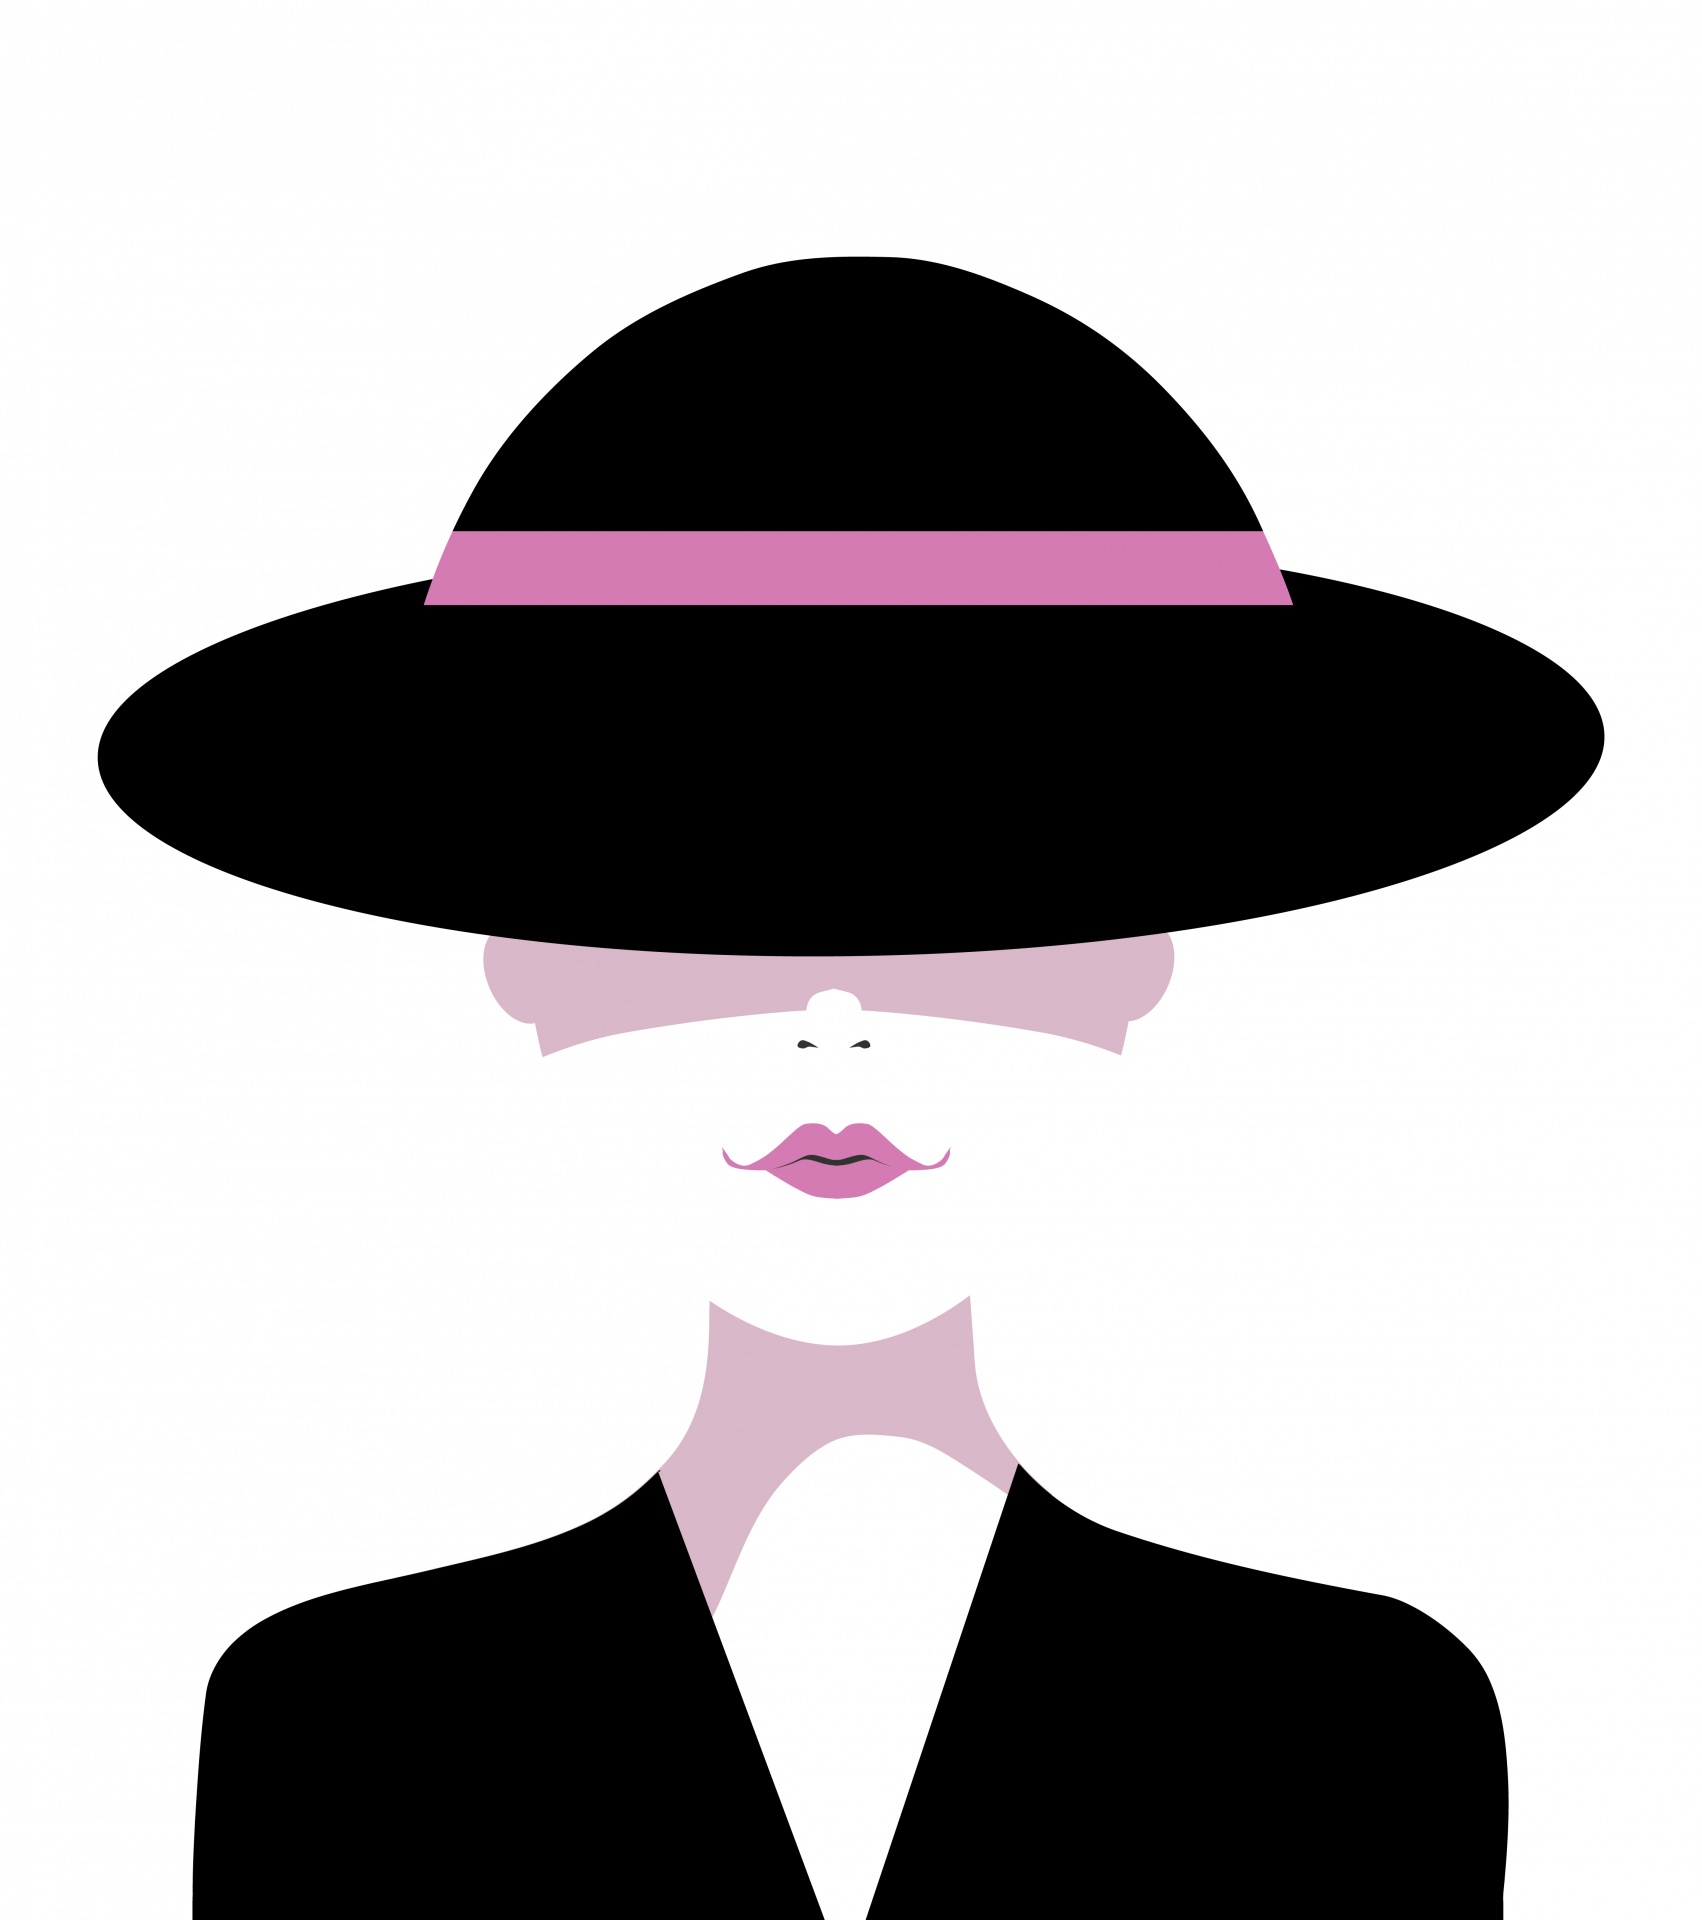 Stylish Woman In Hat